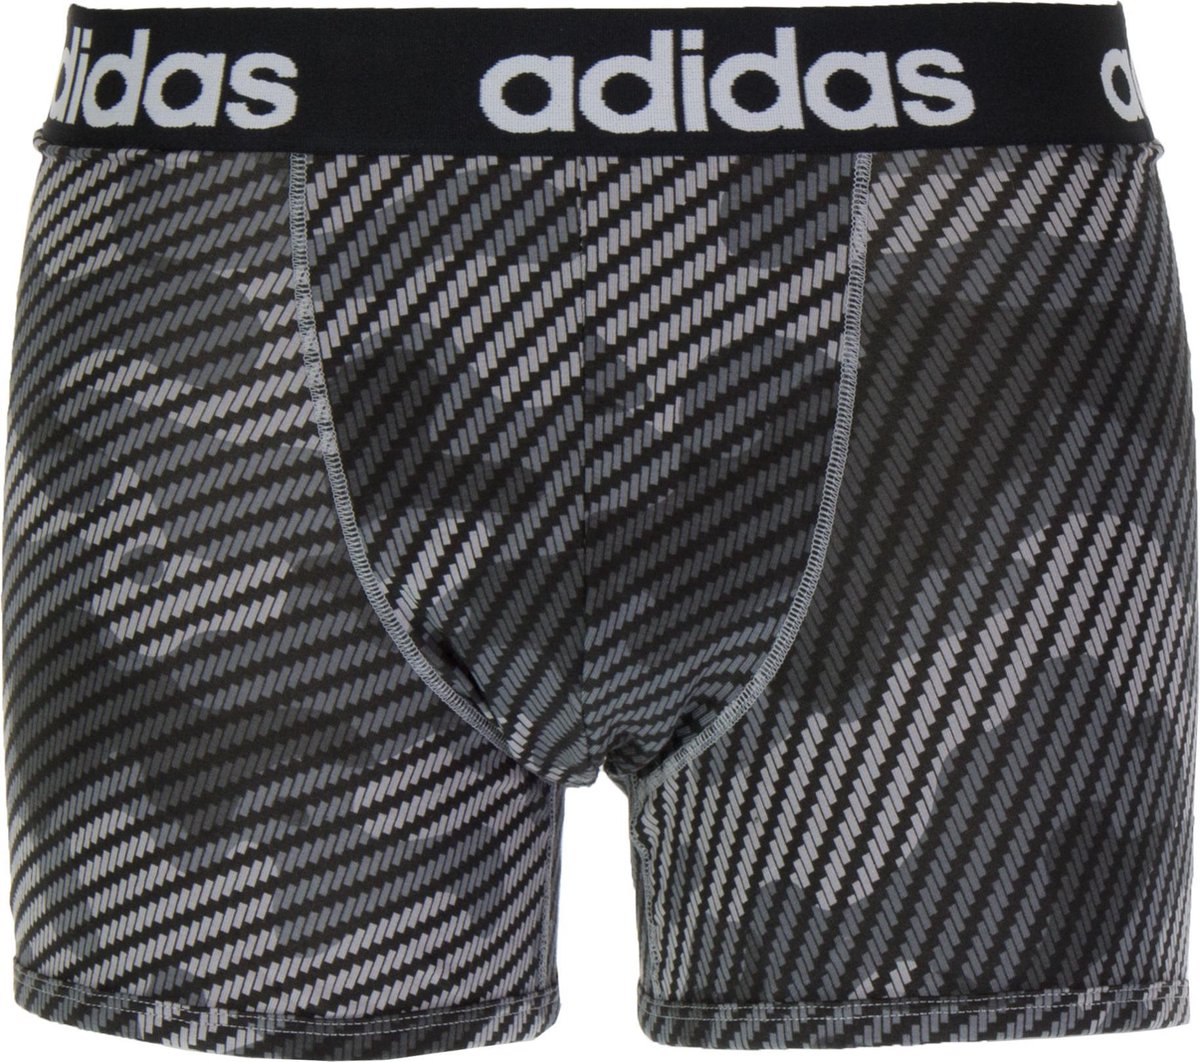 adidas Boxershort - Maat XXL - Mannen - zwart/grijs/wit | bol.com